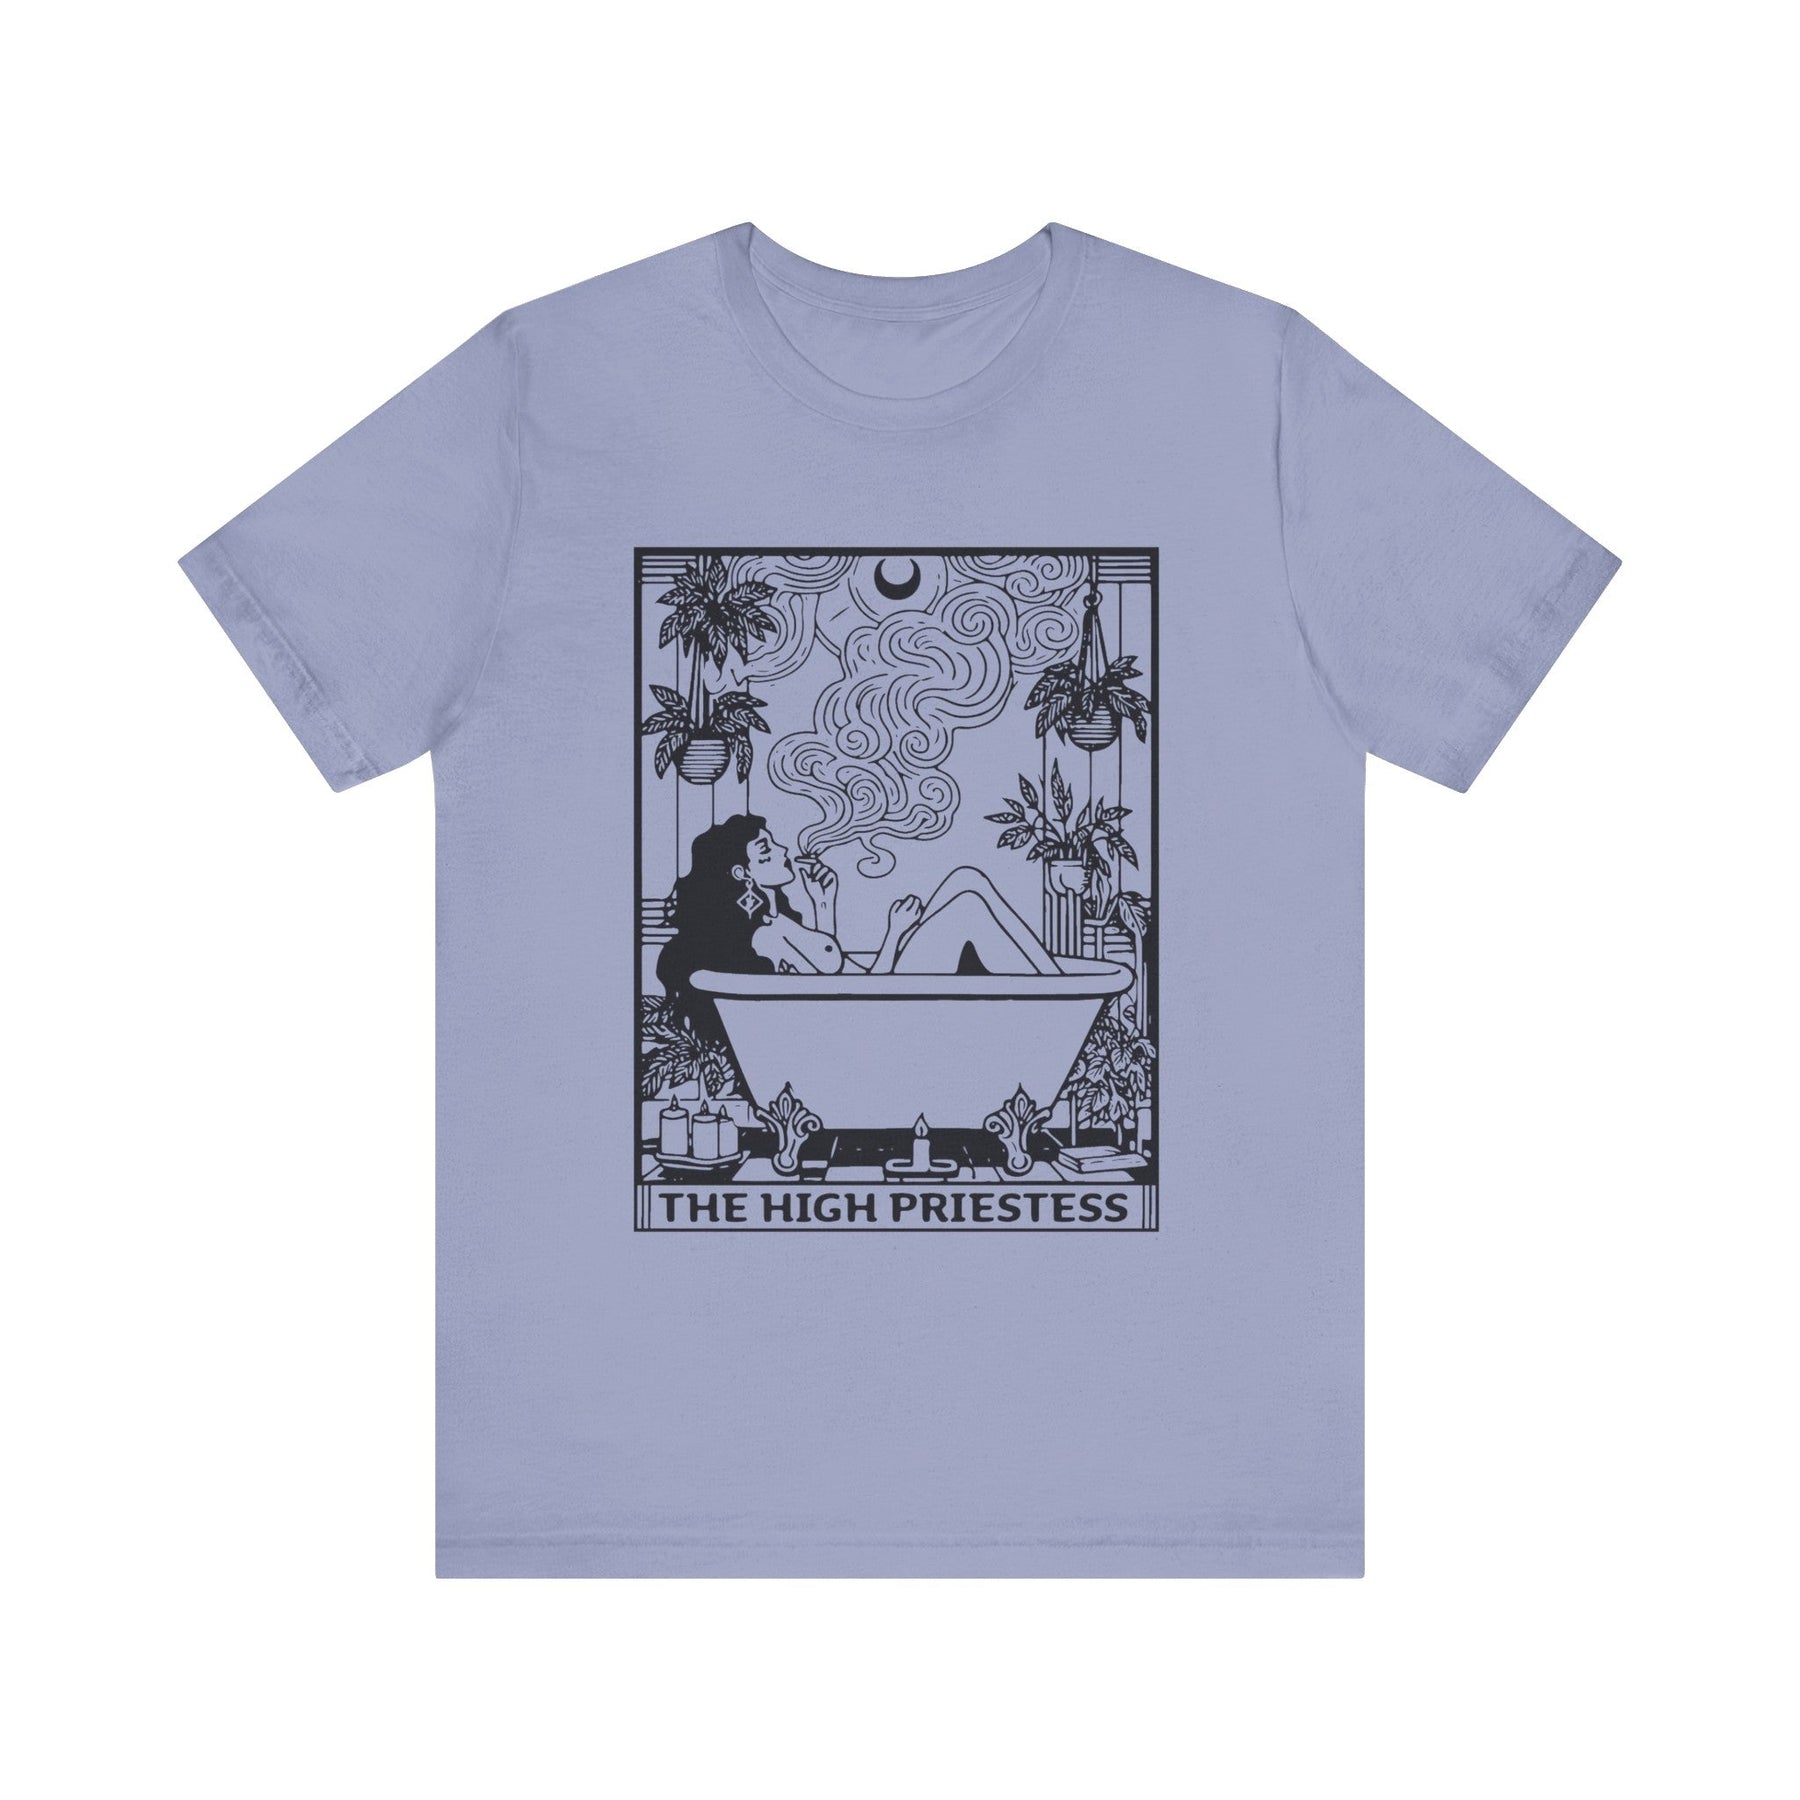 High Priestess Tarot Block Print Short Sleeve Tee - Goth Cloth Co.T - Shirt12387525703601266313